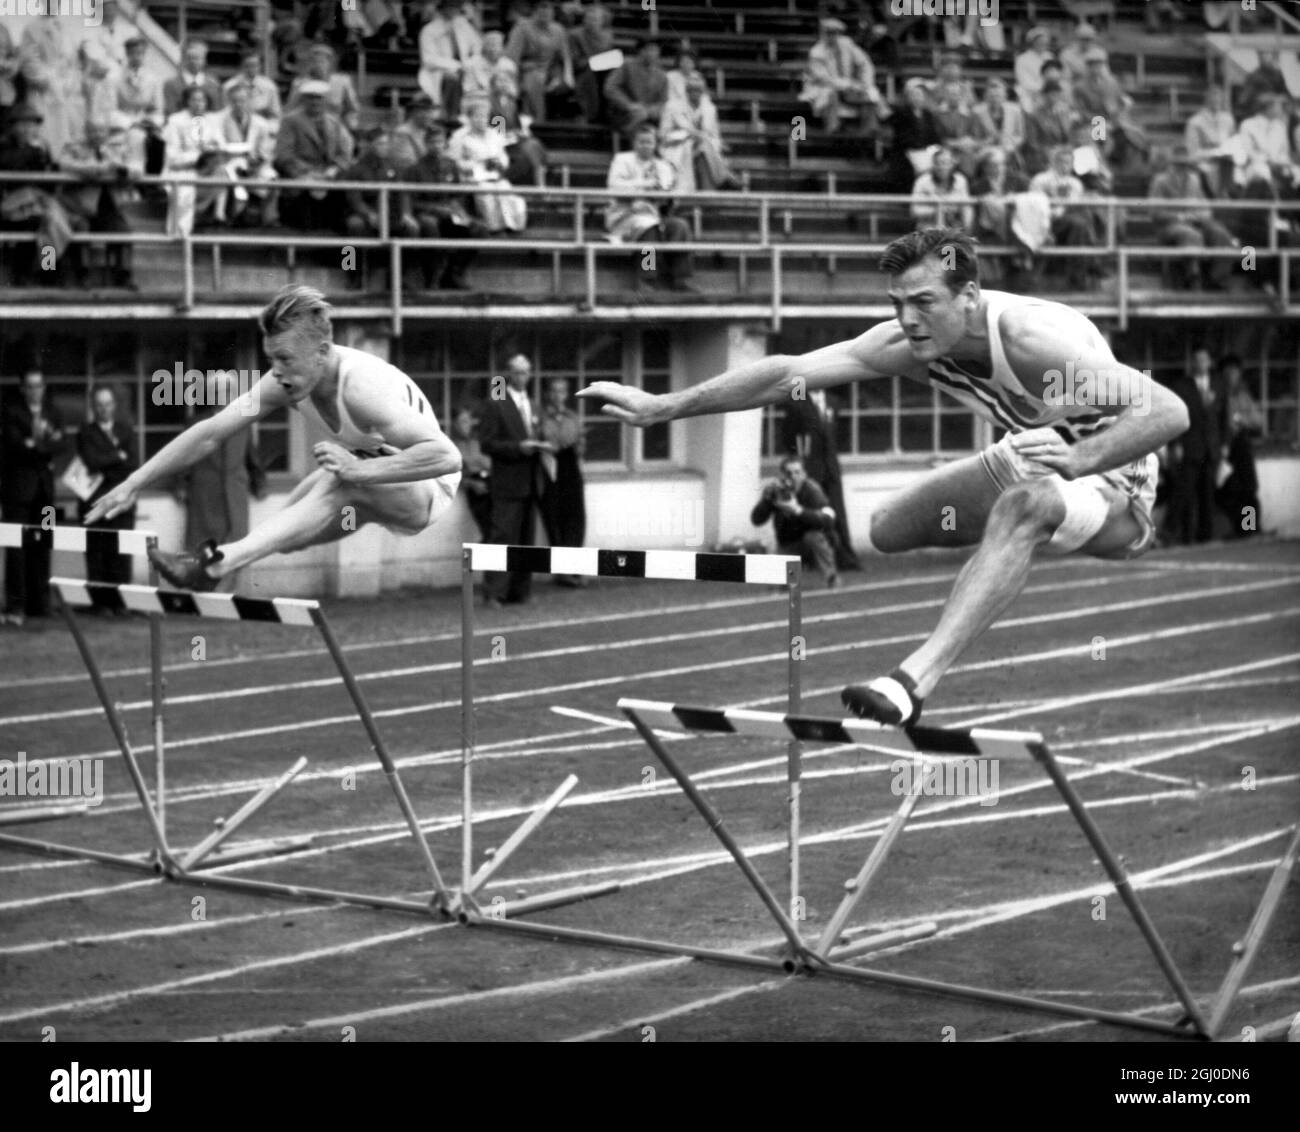 Olympic Games 1952 Robert Mathias of the USA winning heat 8 of the decathlon 110m hurdles event from Geoffrey Elliott (Great Britain) at the Olympic Stadium, Helsinki, Finland. 25th July 1952. Stock Photo